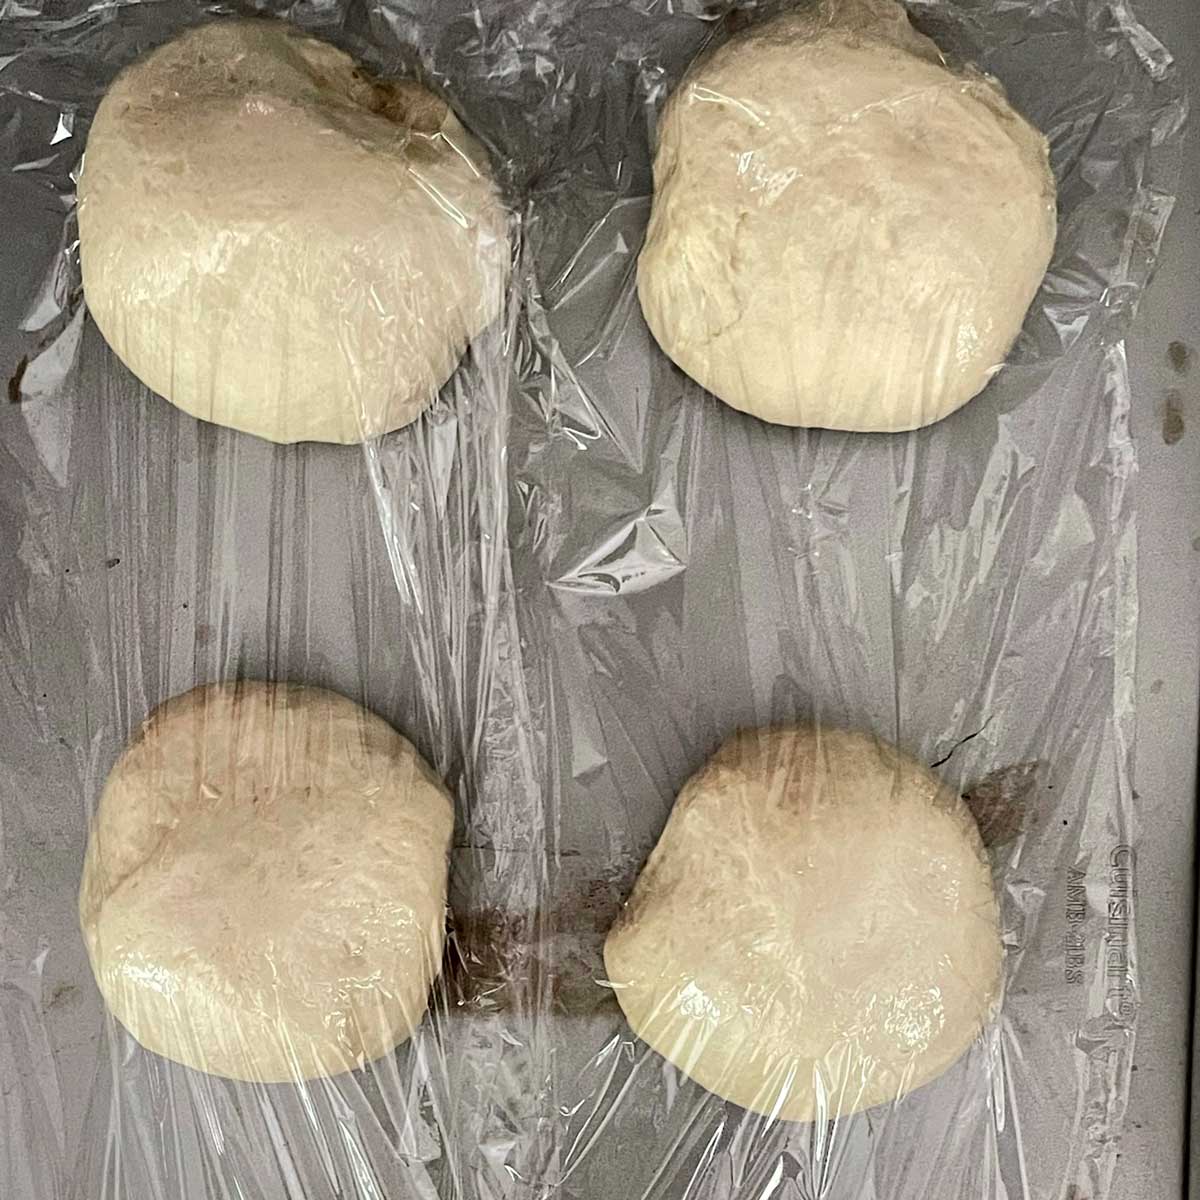 Bread bowl balls ready to bake.